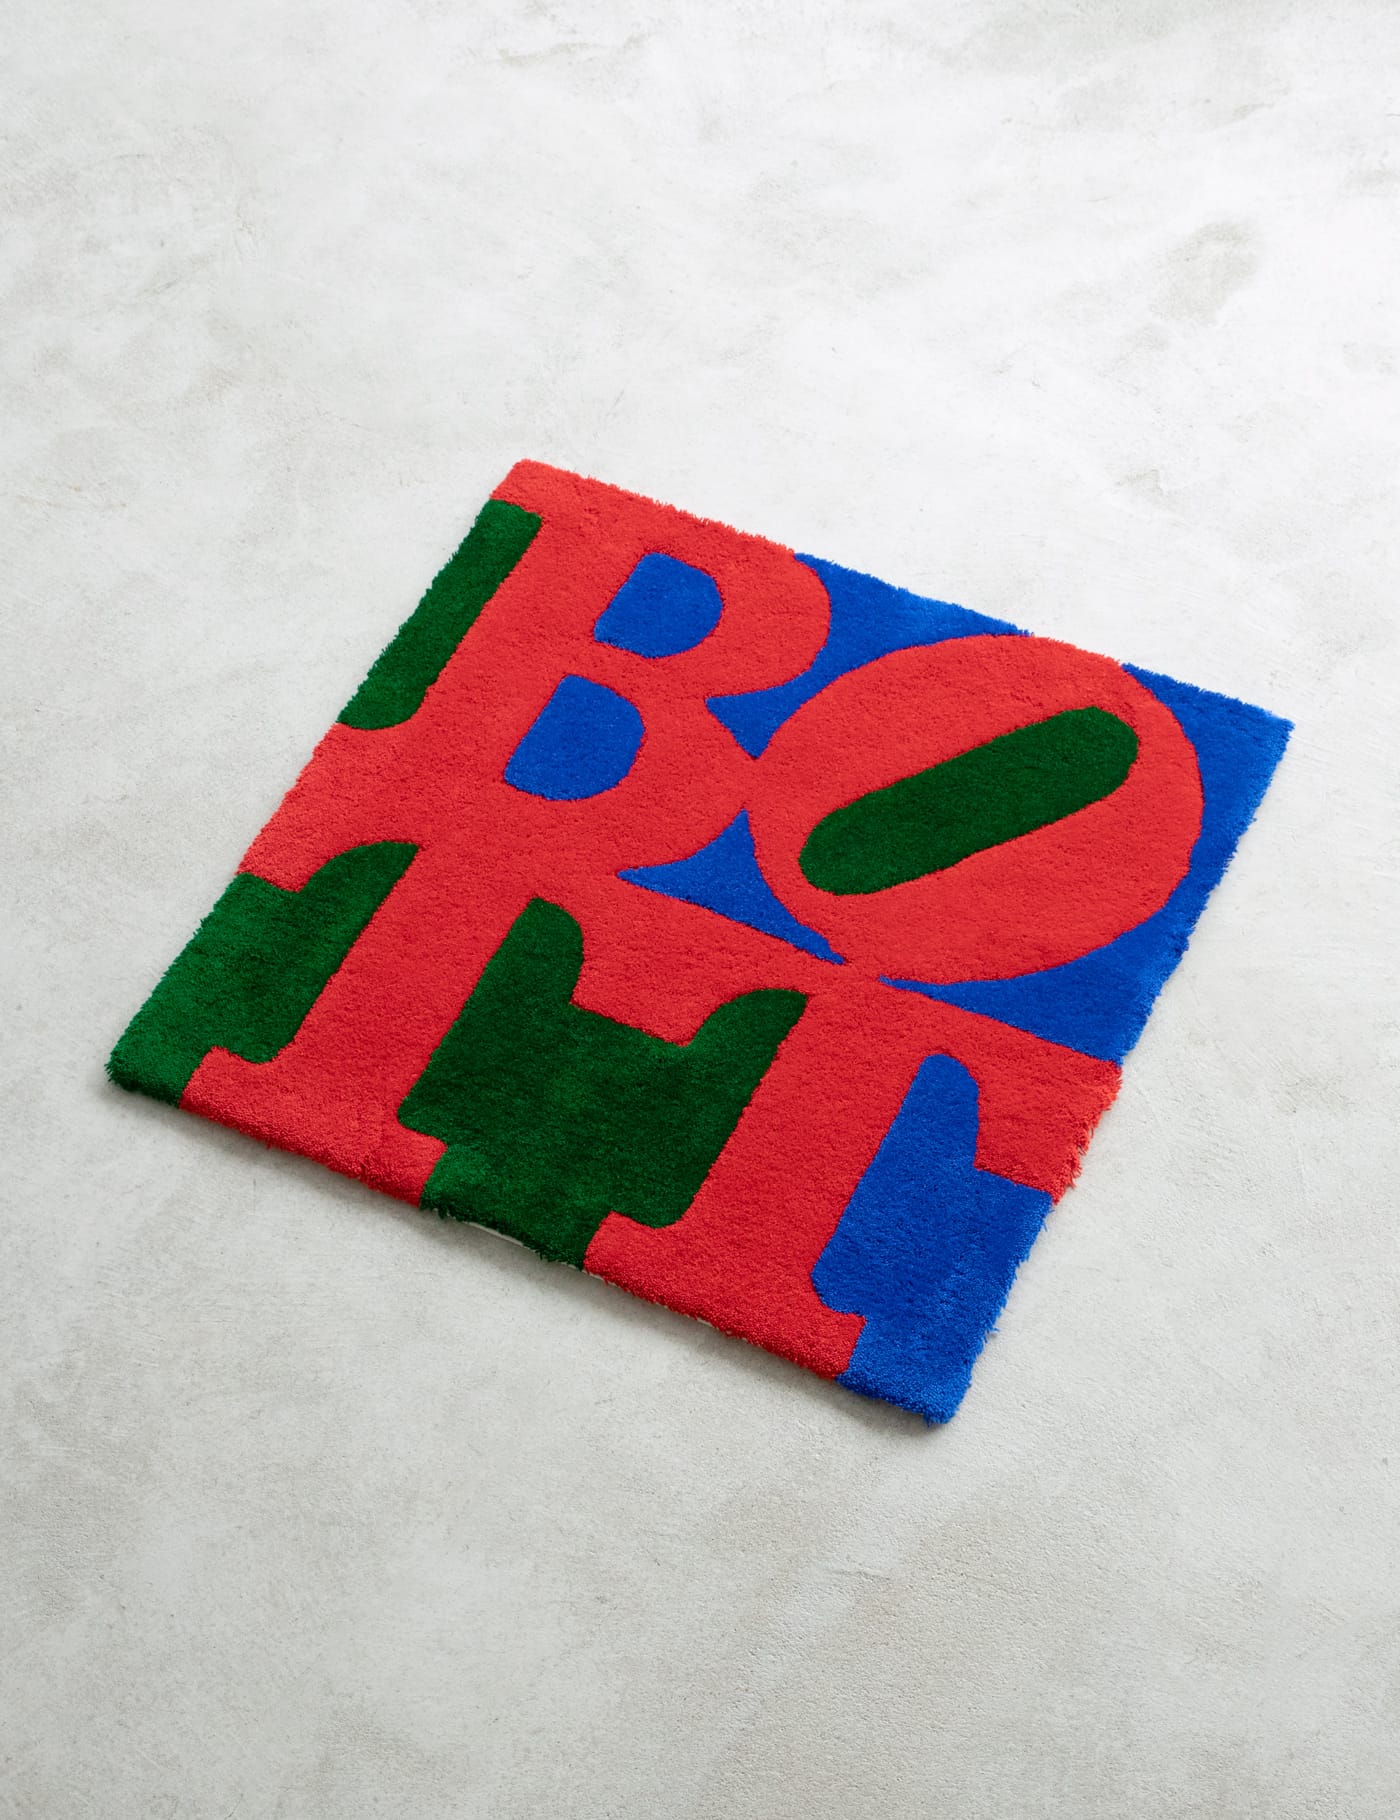 BoTT - Square Logo Rug Mat | HBX - ハイプビースト(Hypebeast)が厳選